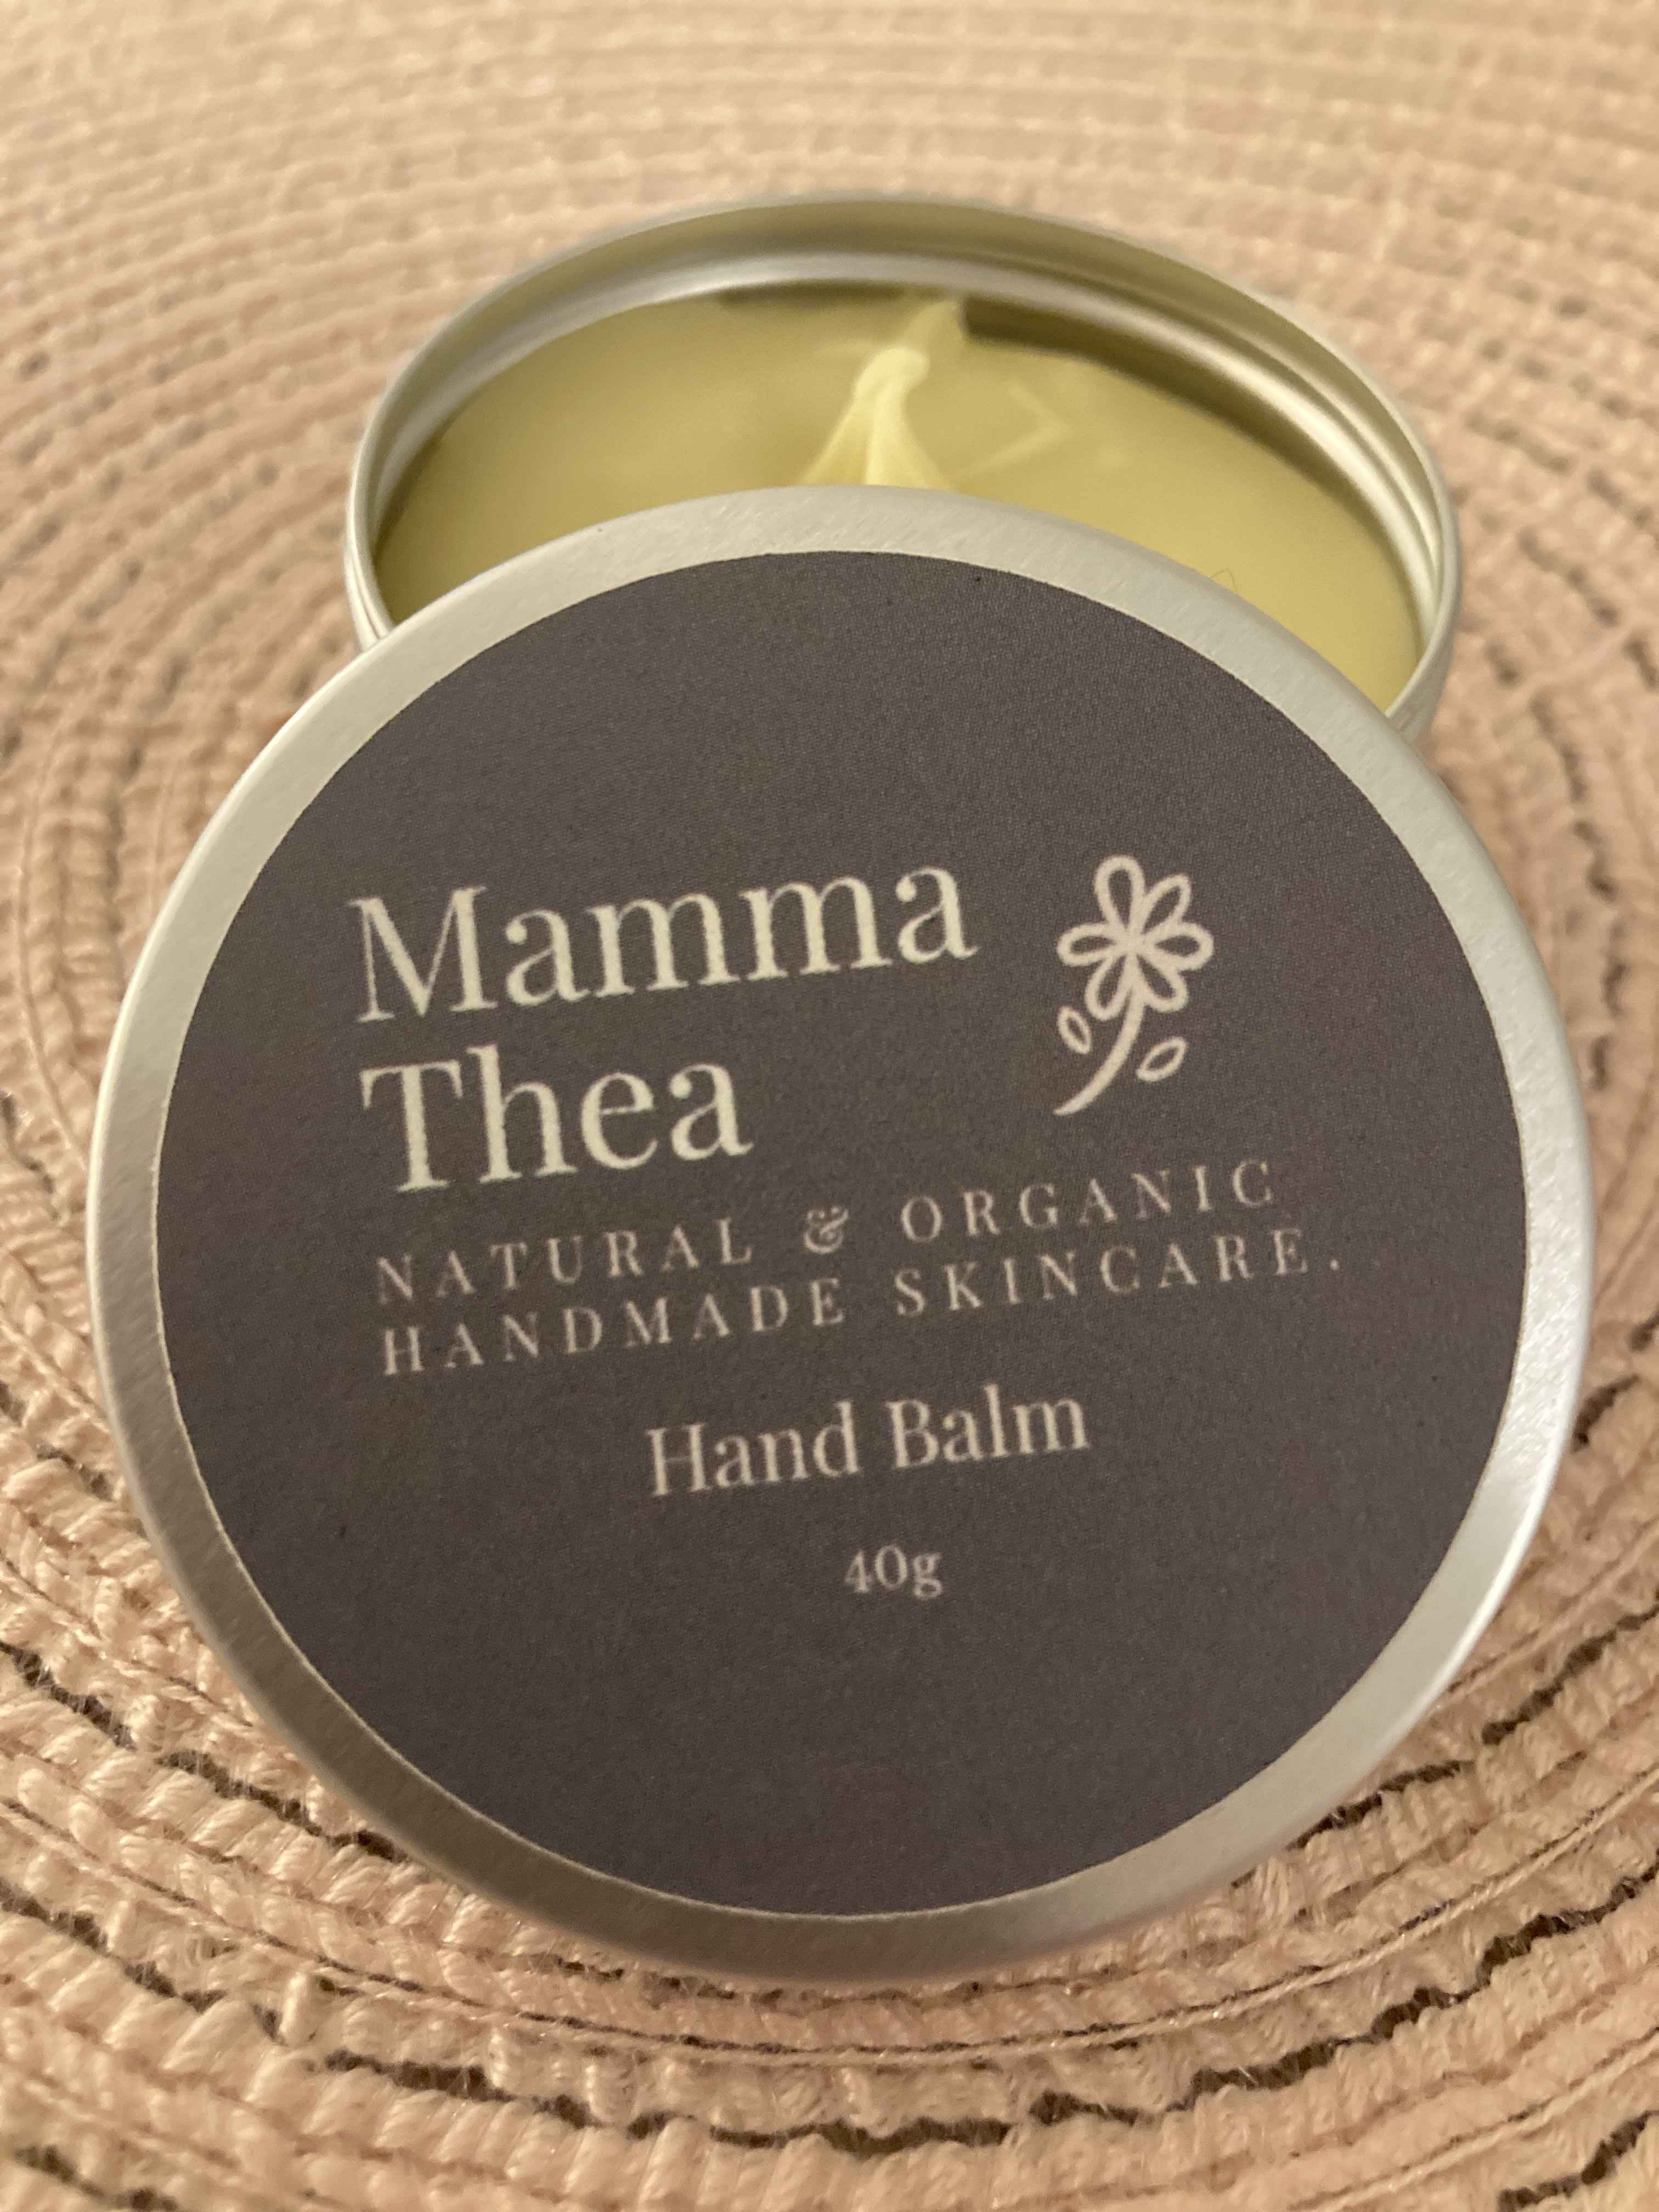 Natural & Organic Mamma Thea Hand Balm. 